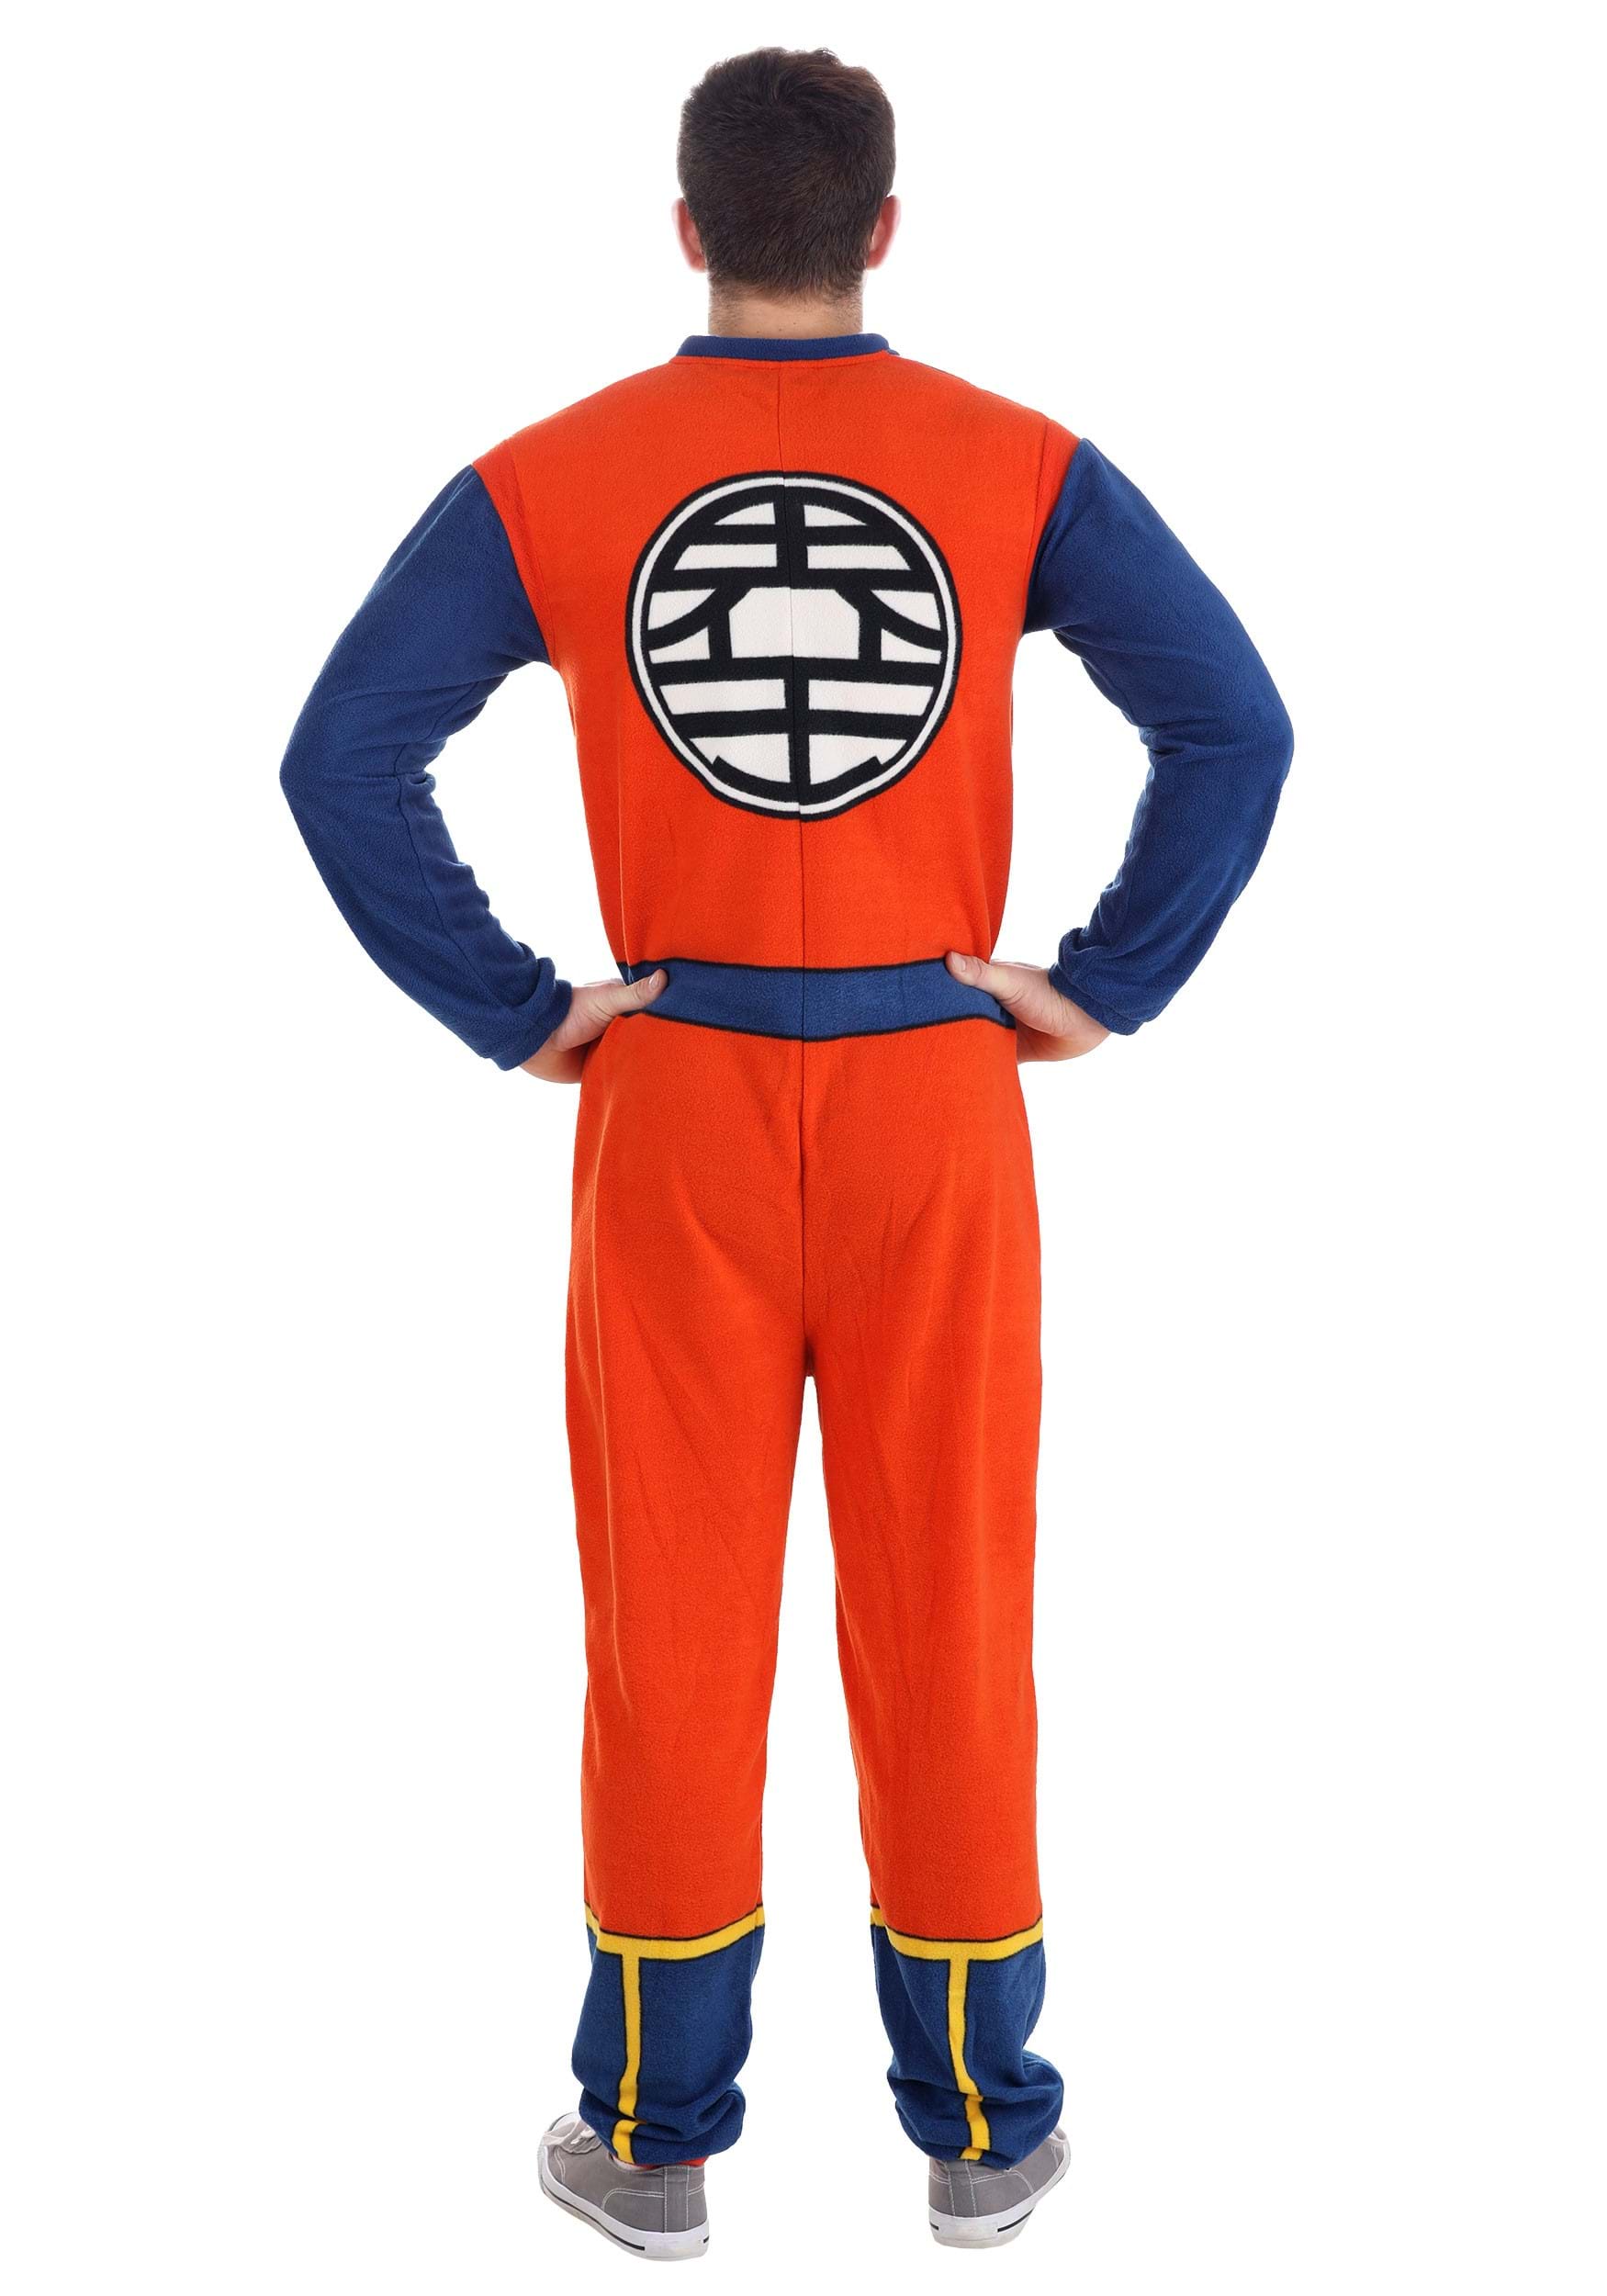 Dragon Ball Z Goku Union Suit For Adults